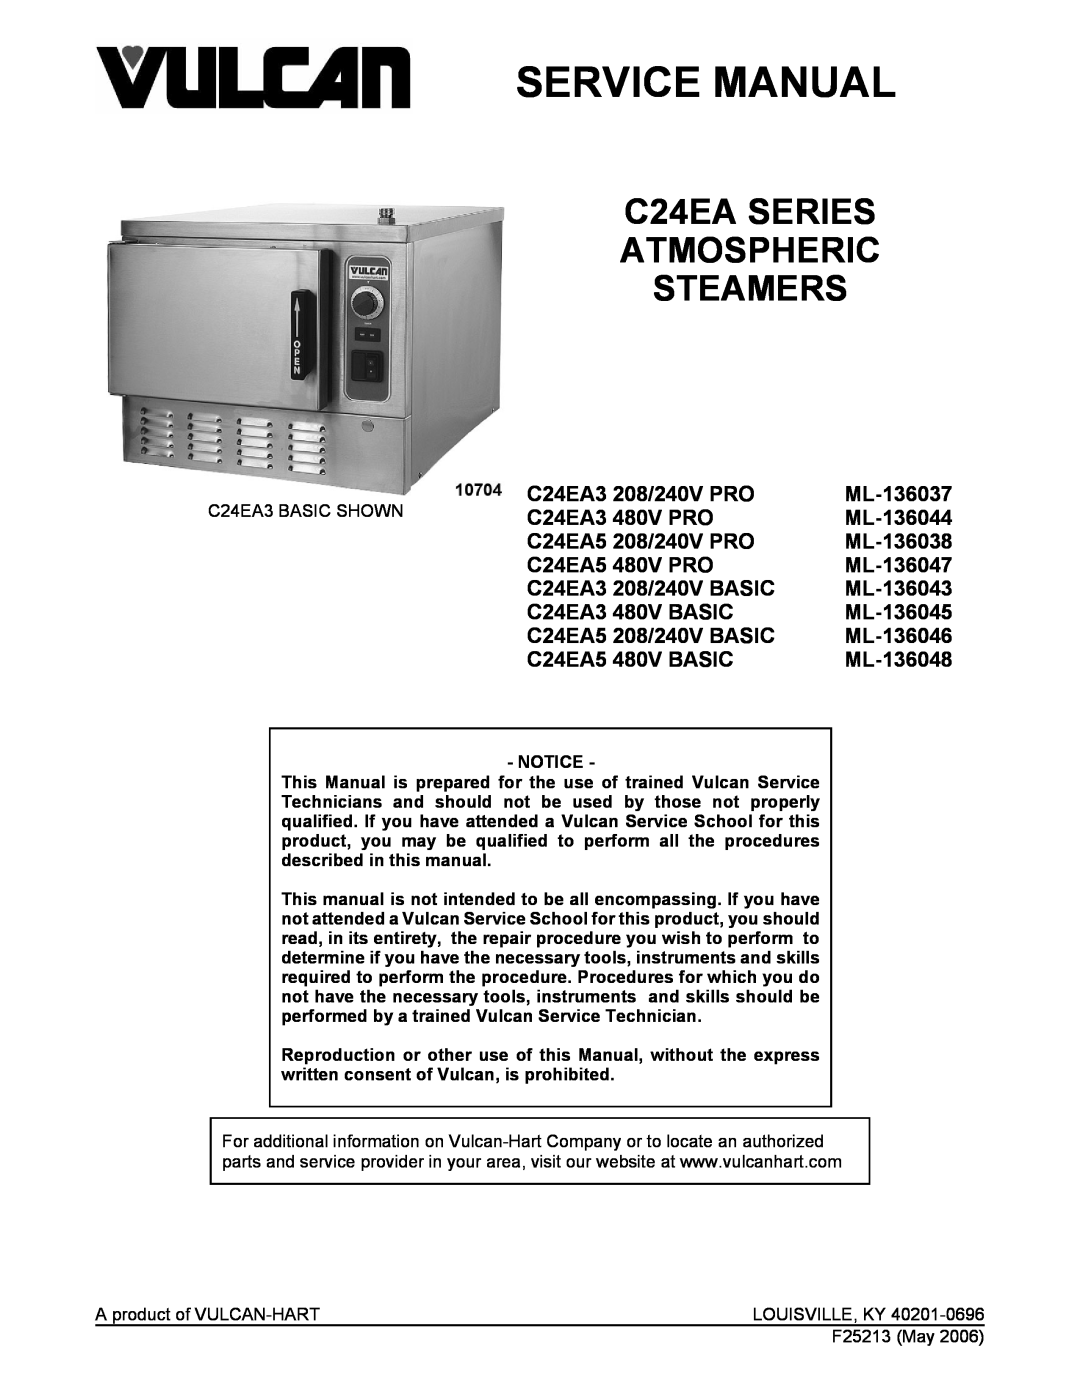 Vulcan-Hart C24EA5 480V PRO, C24EA5 480V BASIC service manual C24EA SERIES ATMOSPHERIC STEAMERS, Service Manual 